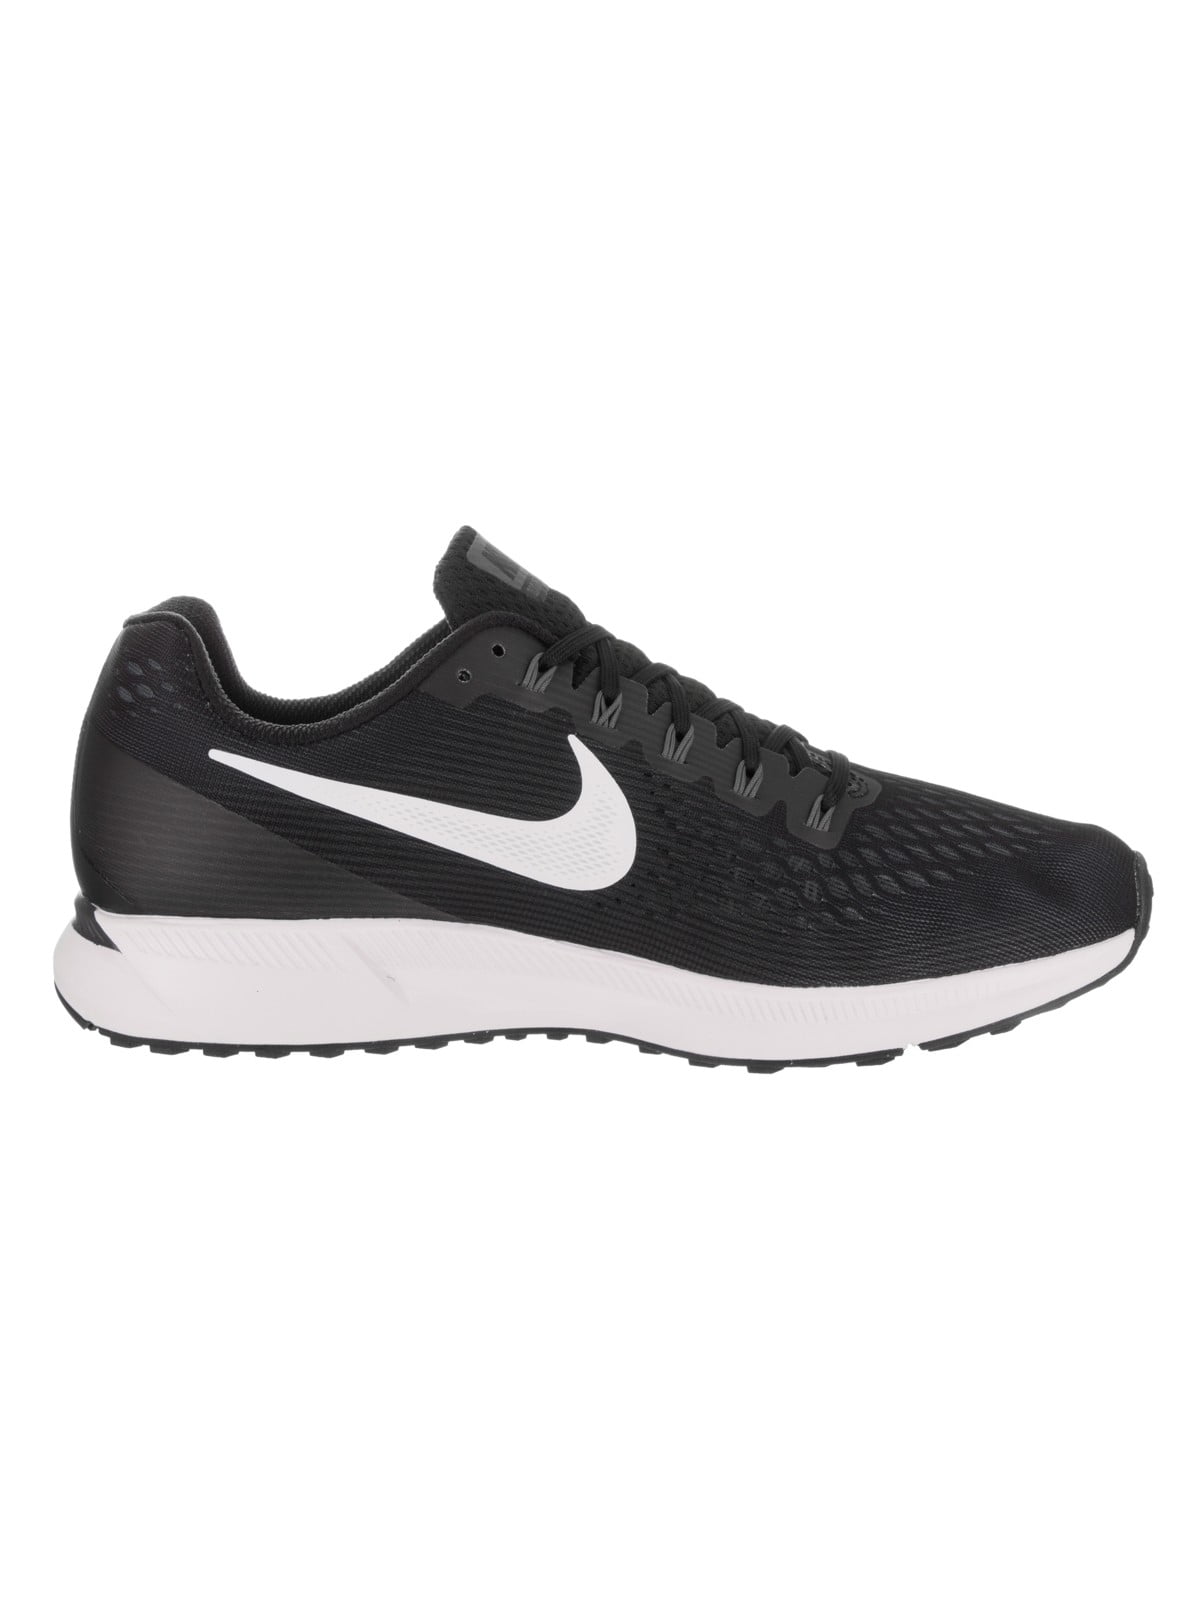 Nike Men's Air Zoom Pegasus 34 Black / White-Dark Grey Ankle-High Shoe - 9.5M - Walmart.com